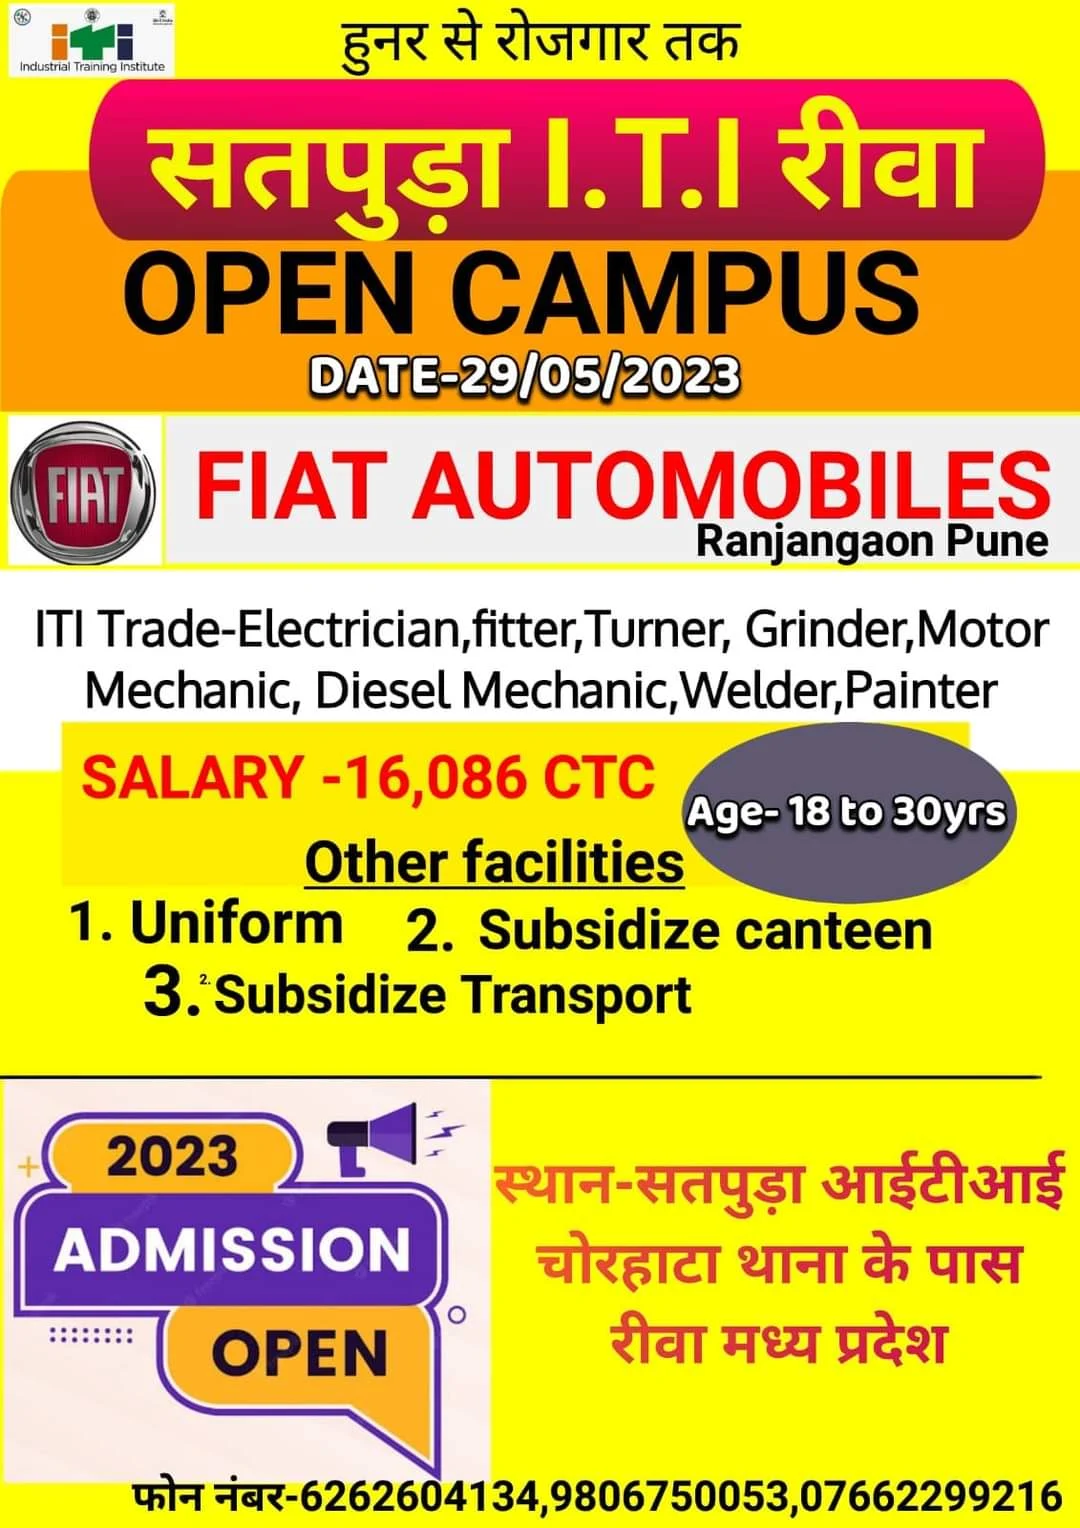 ITI Jobs Vacancies for Fiat Automobile India Limited | ITI Campus Placement at Satpuda Private ITI Rewa, Madhya Pradesh